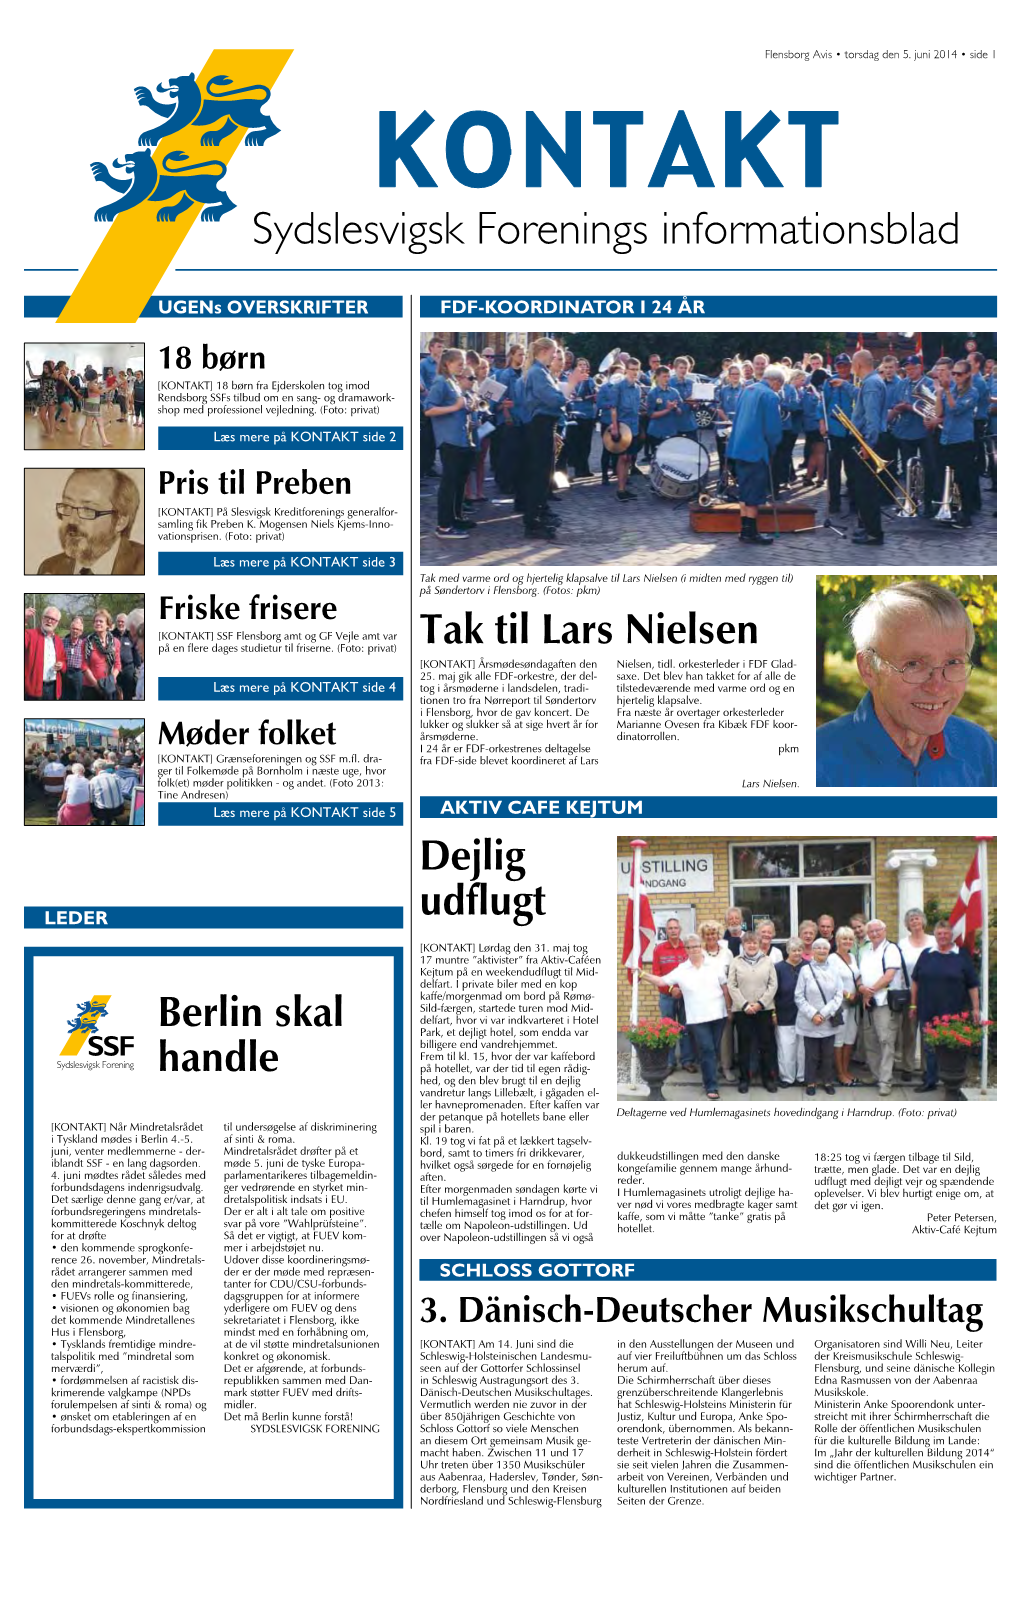 Sydslesvigsk Forenings Informationsblad